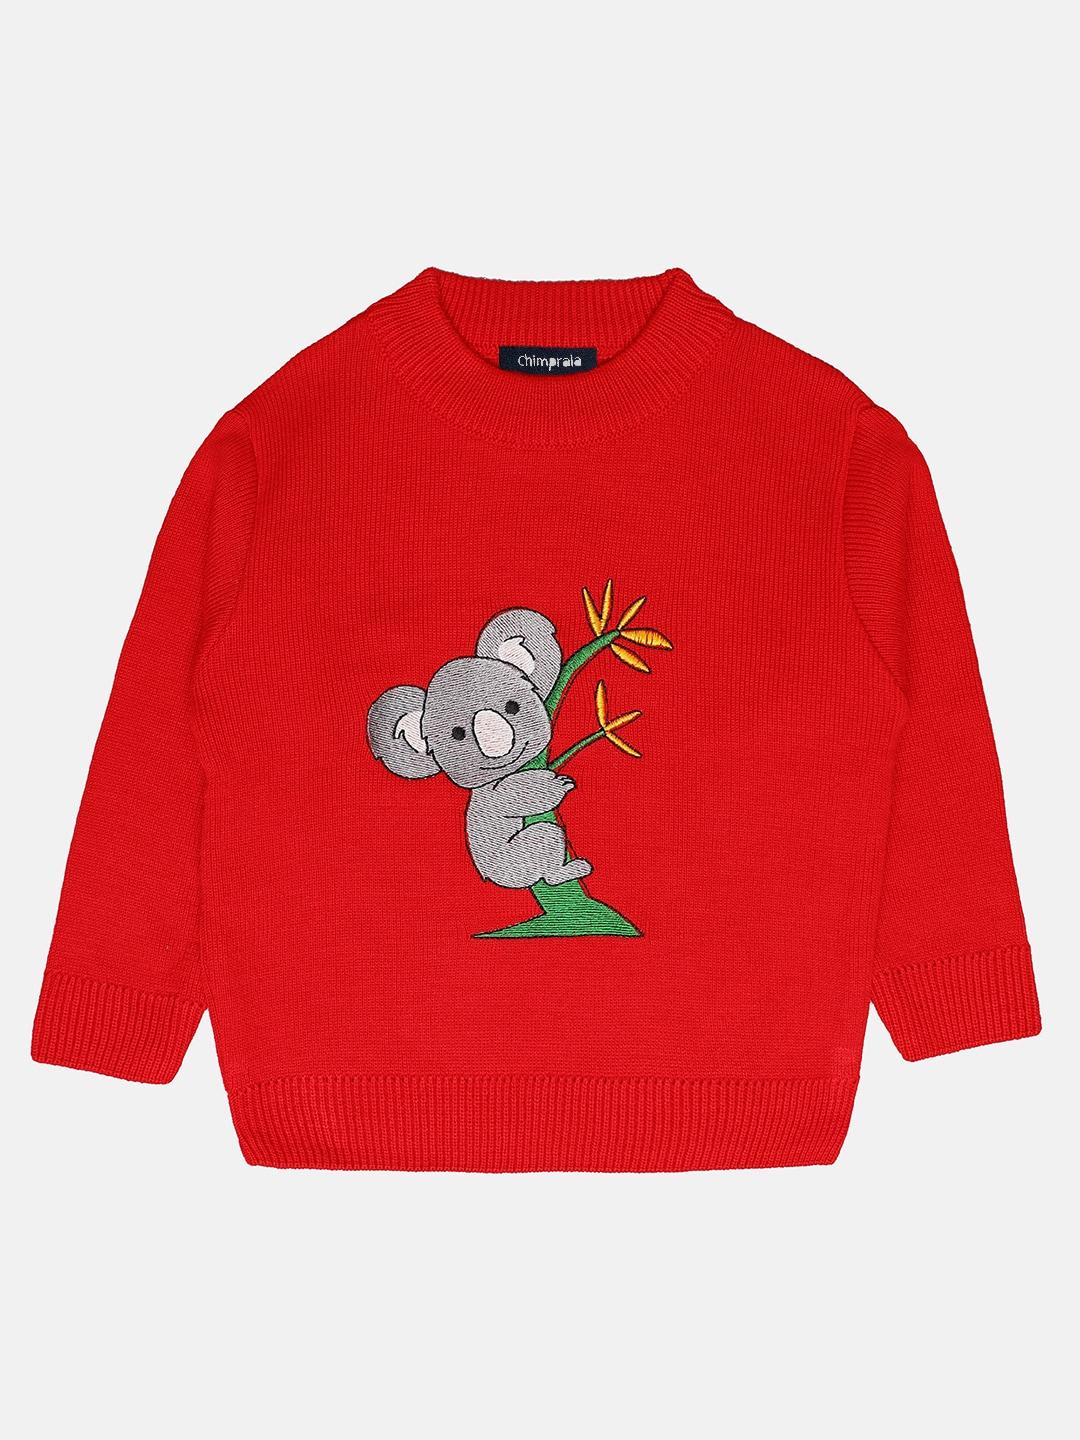 chimprala boys red & grey printed pullover